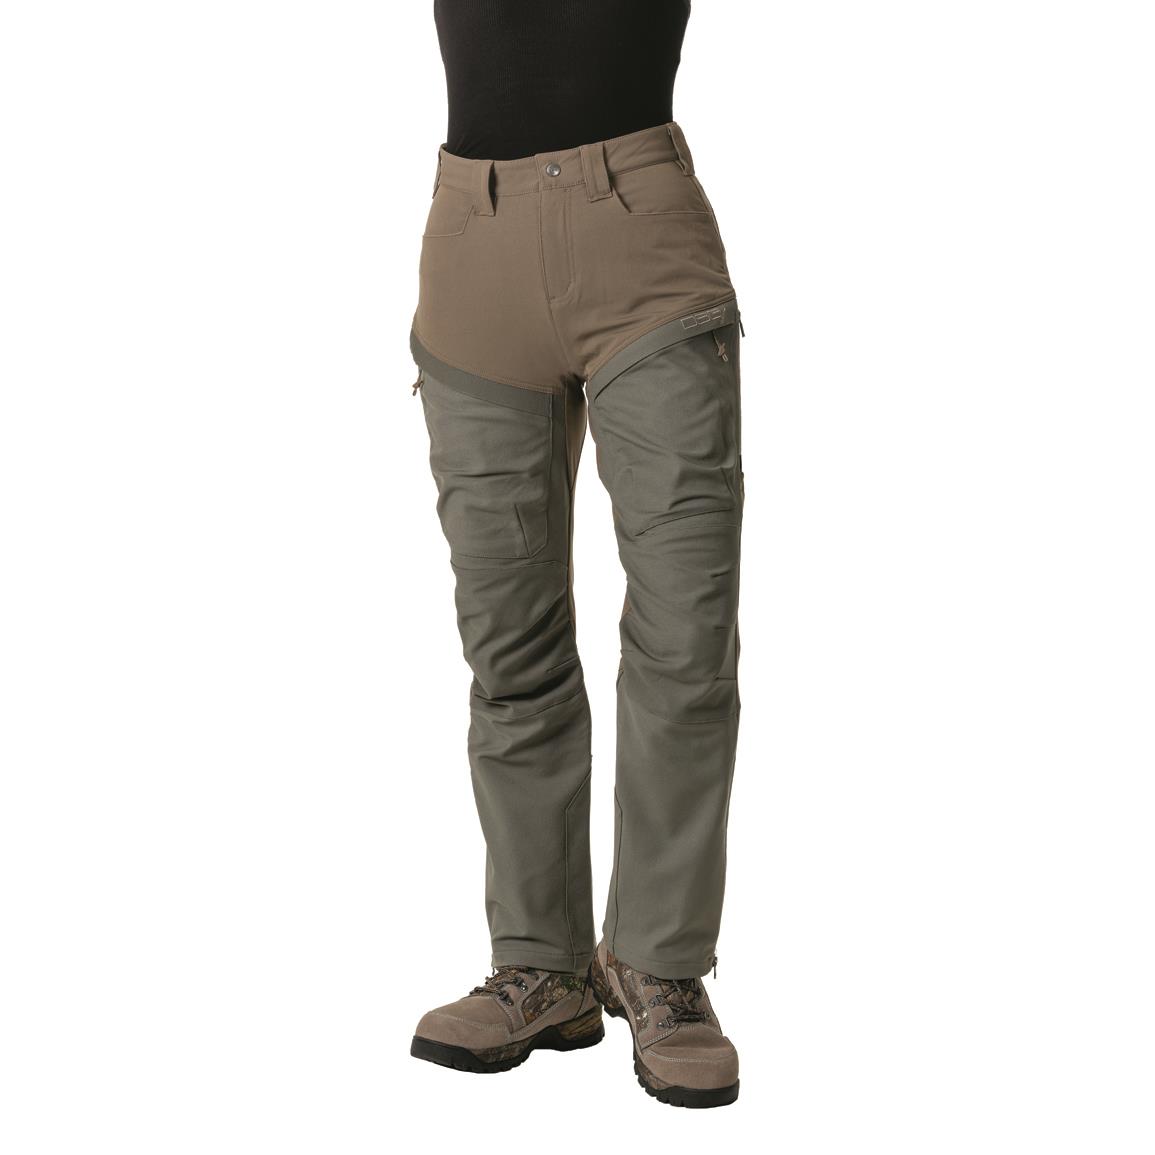 DSG Outerwear Women's Kortni Upland Hunting Pants, Stone Grey